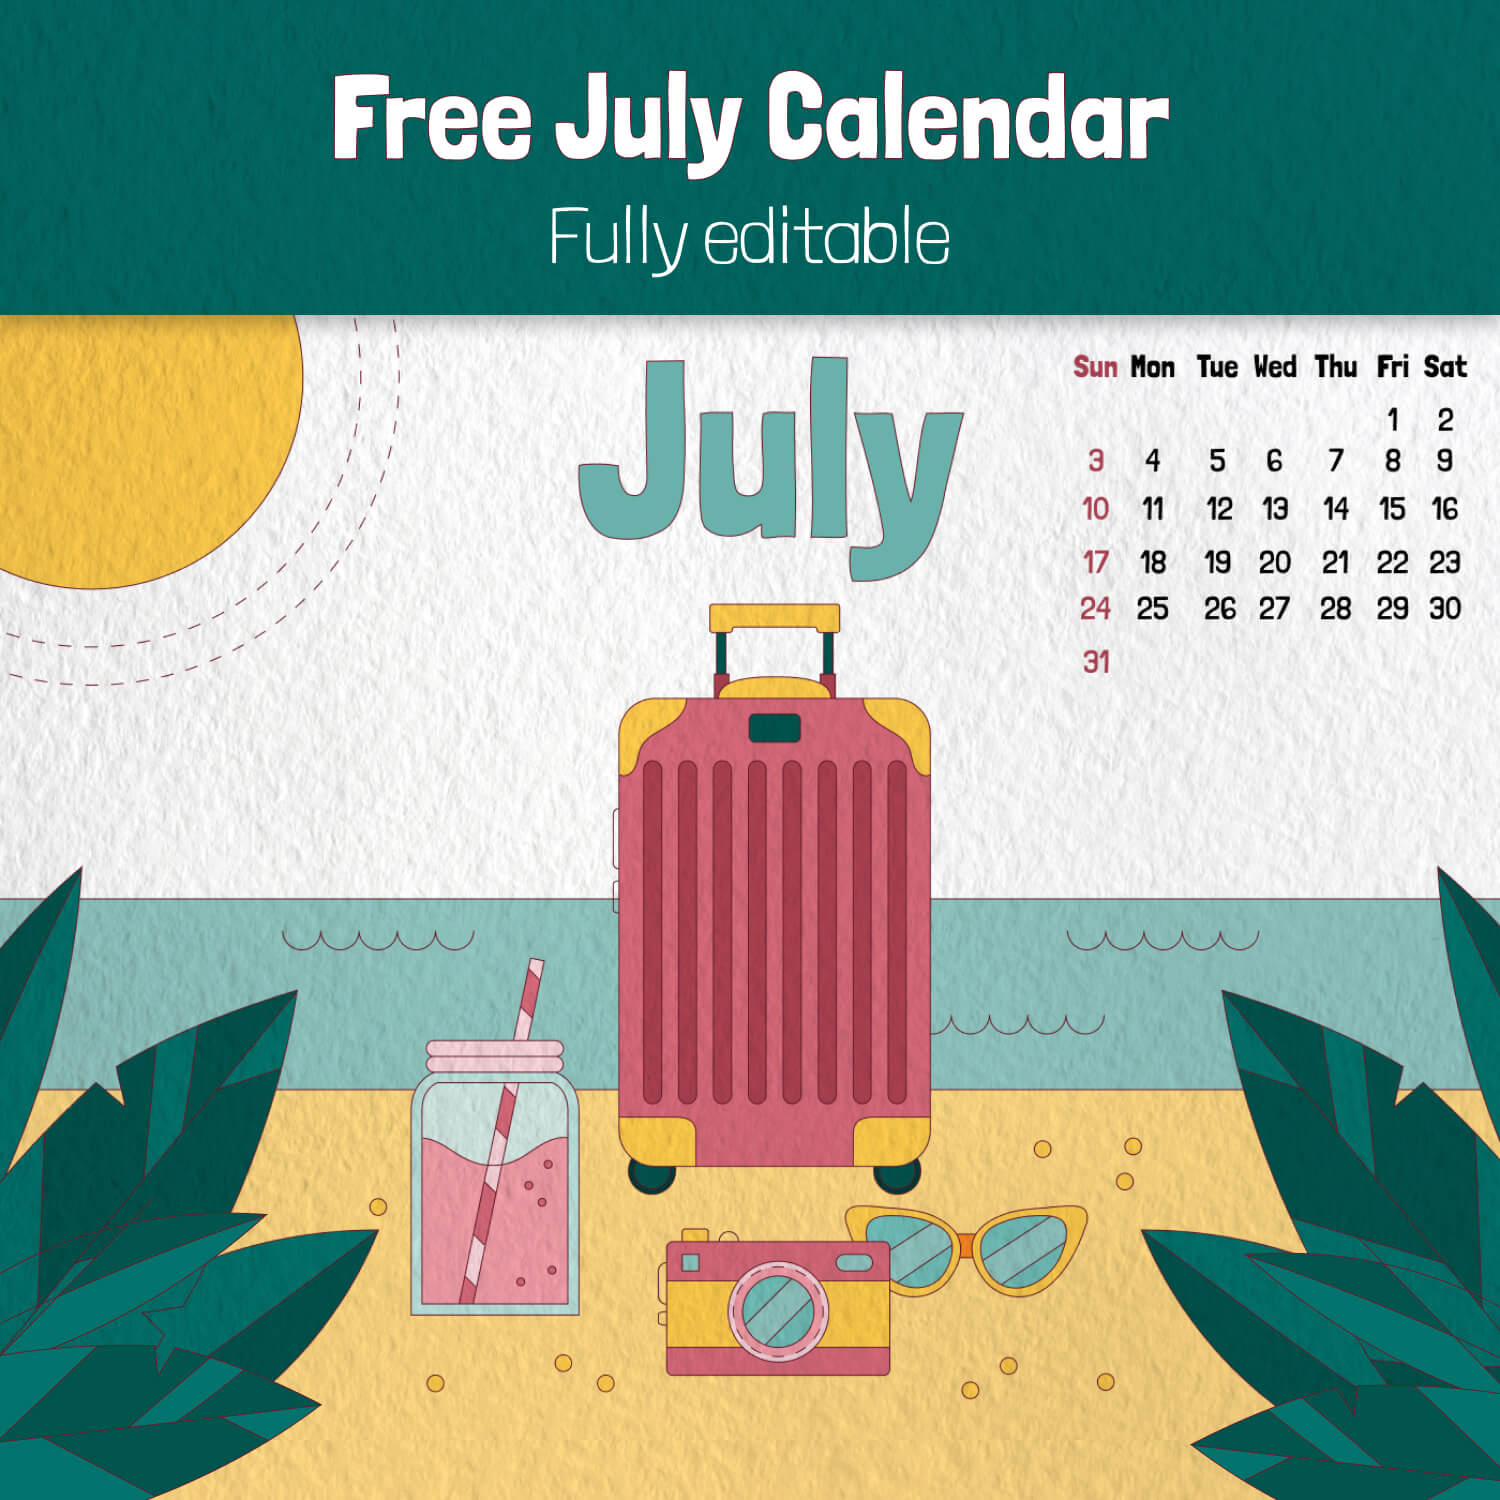 Free Editable July Calendar cover image.